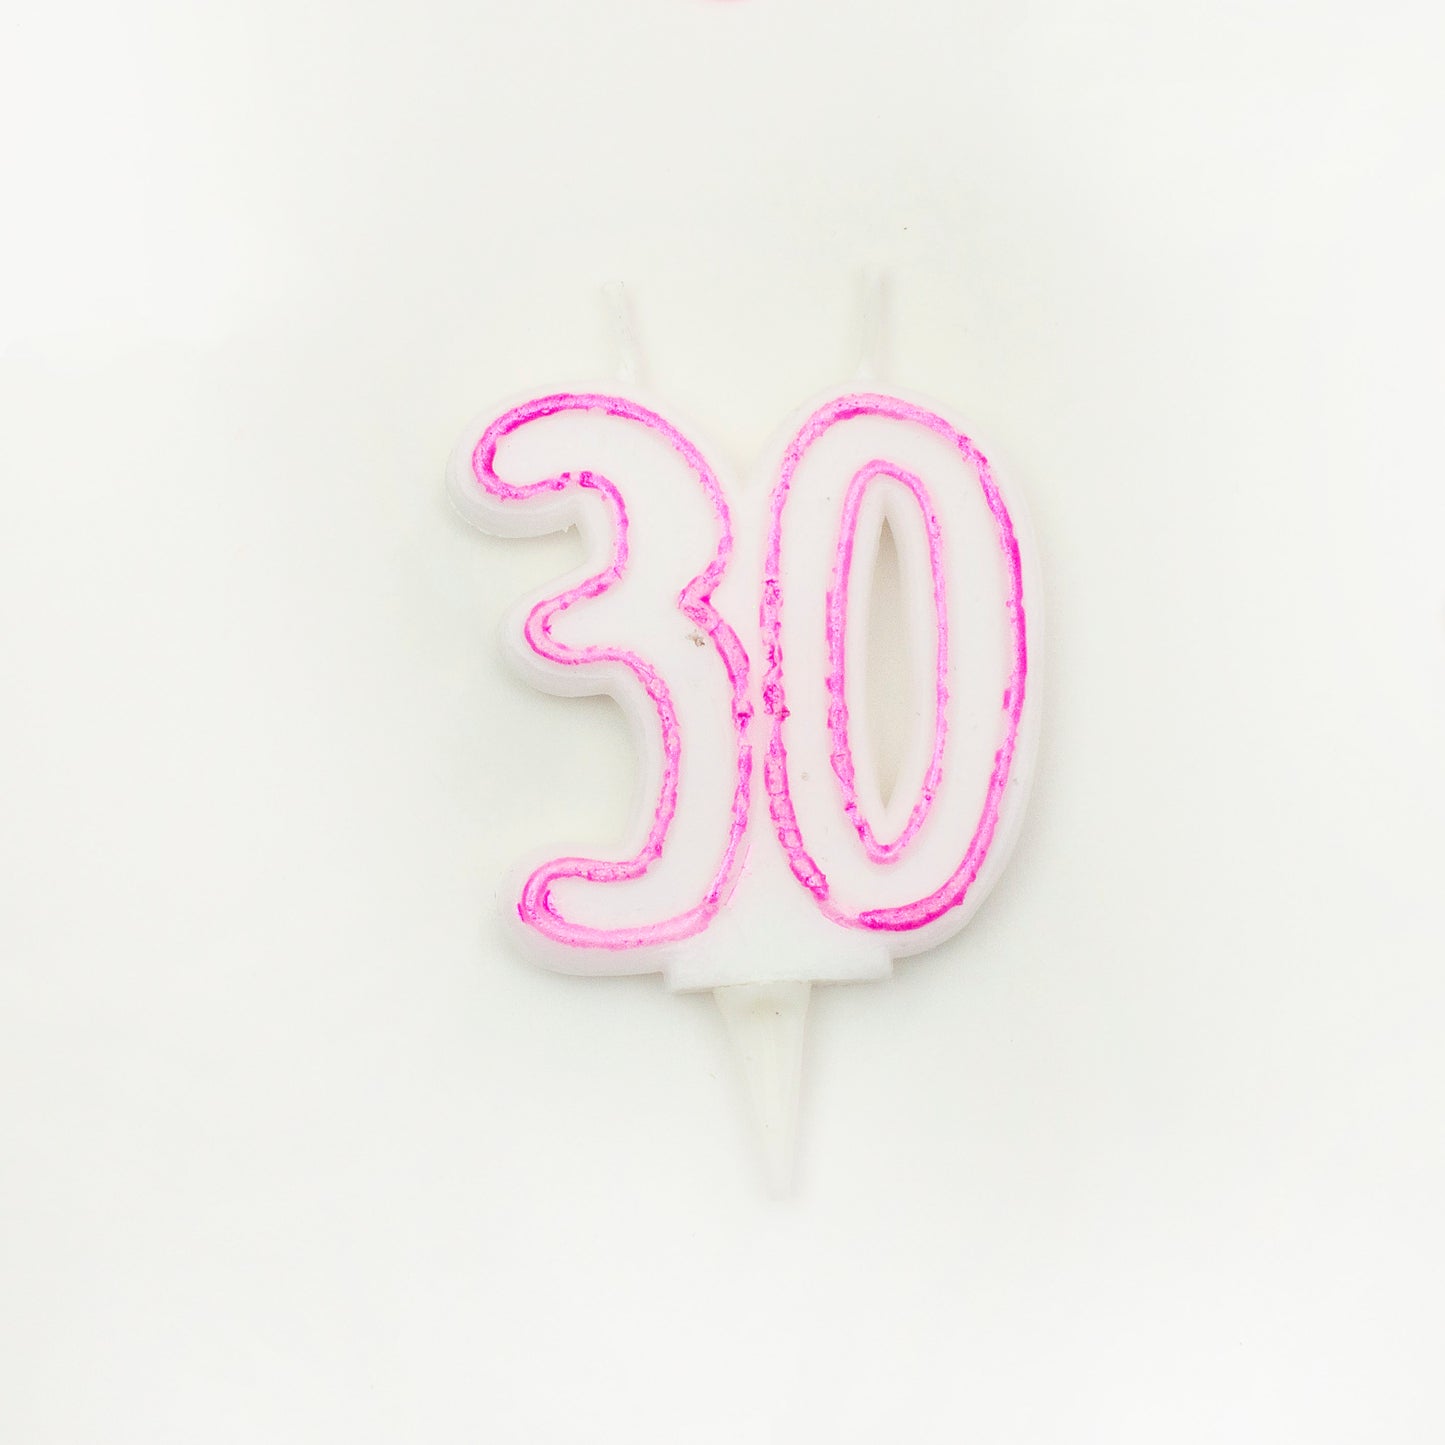 Age 30 Pink Milestone Candle 